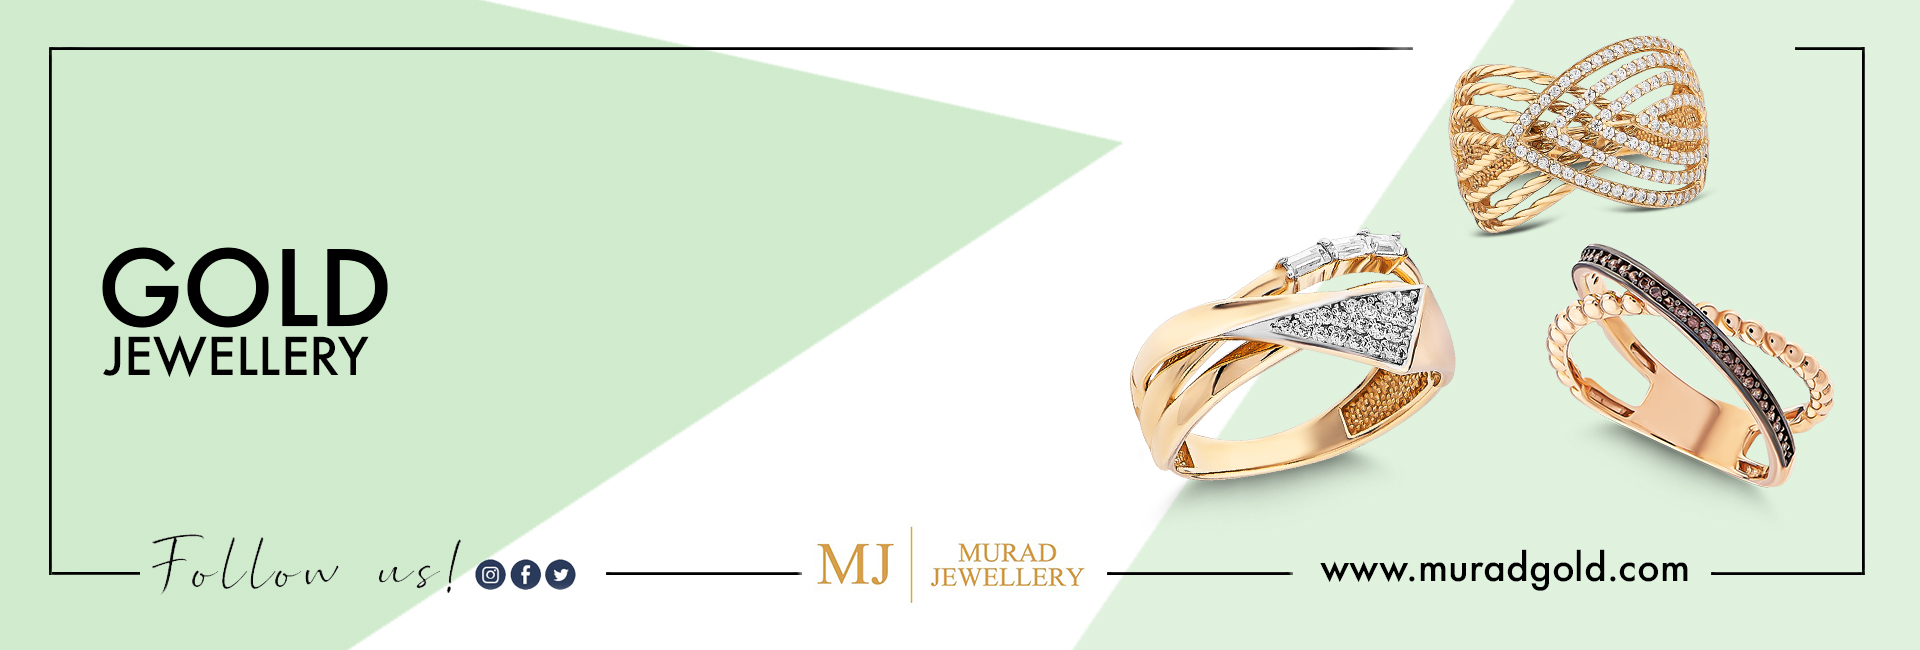 Murad Jewellery